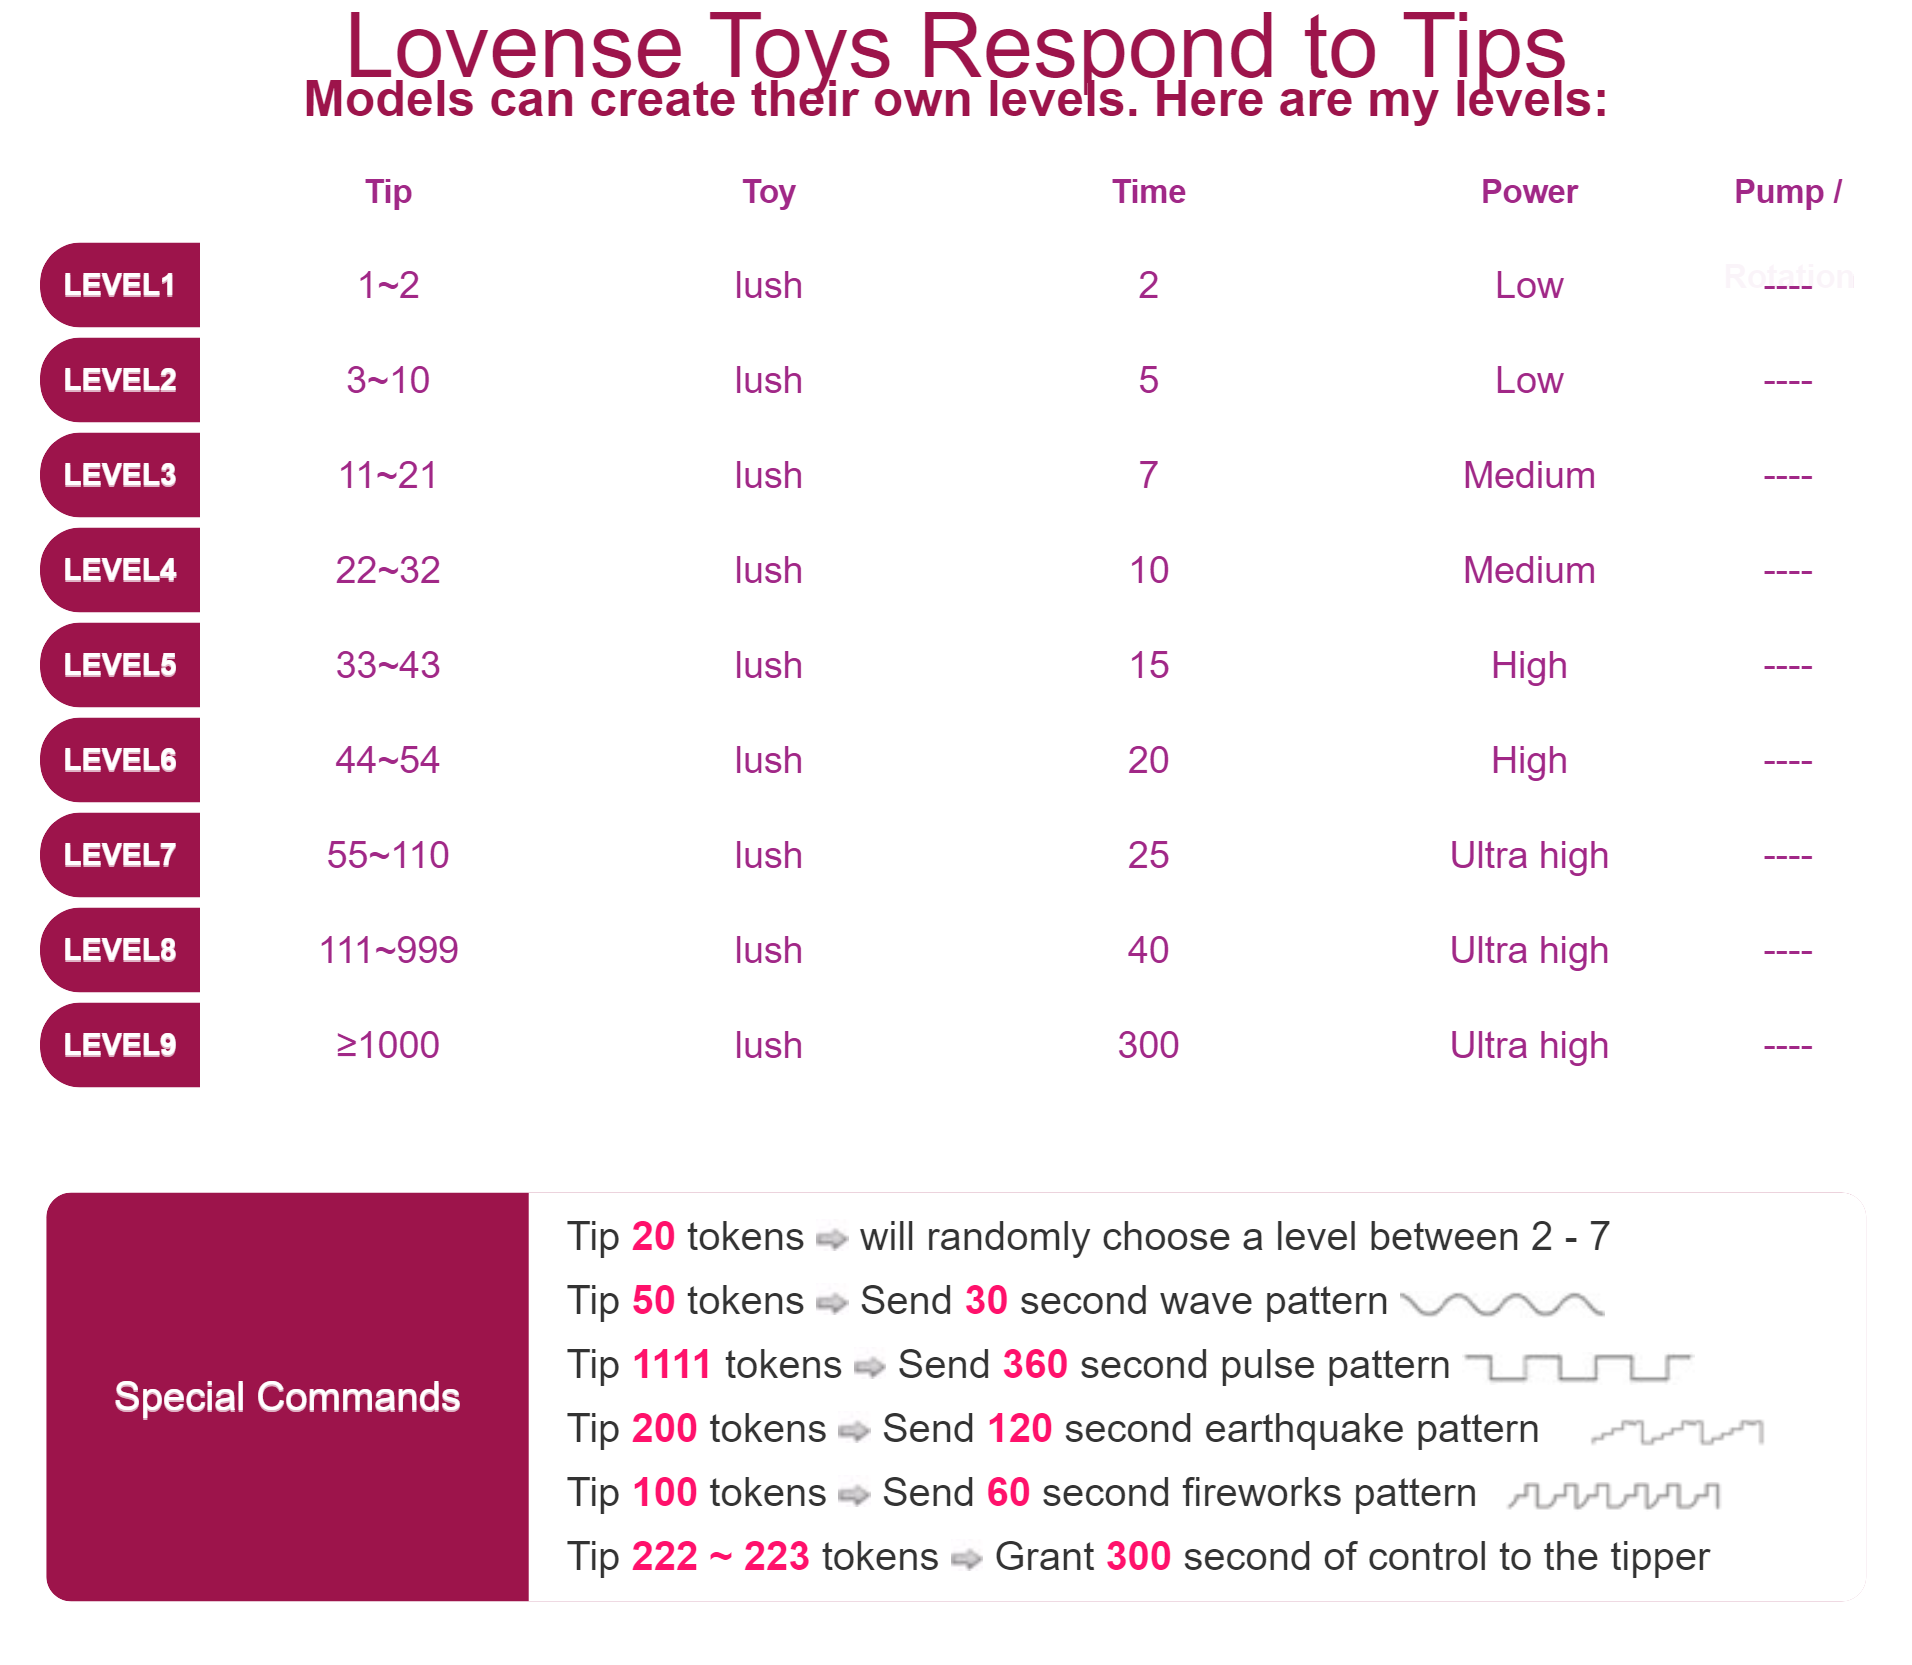 YourMonica Lovense Toys Respond to Tips image: 1